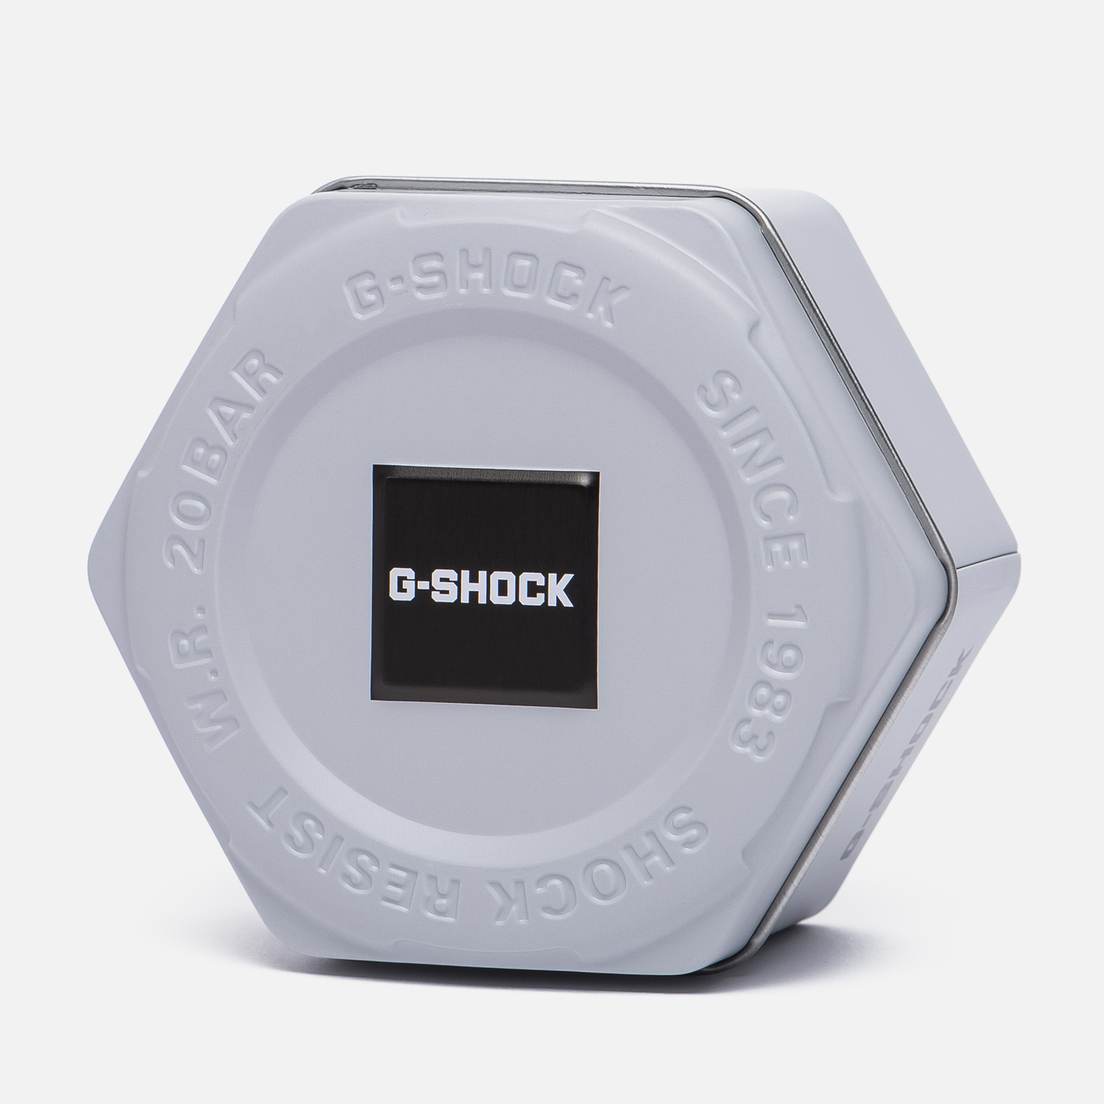 CASIO Наручные часы G-SHOCK GMA-S110MP-4A2